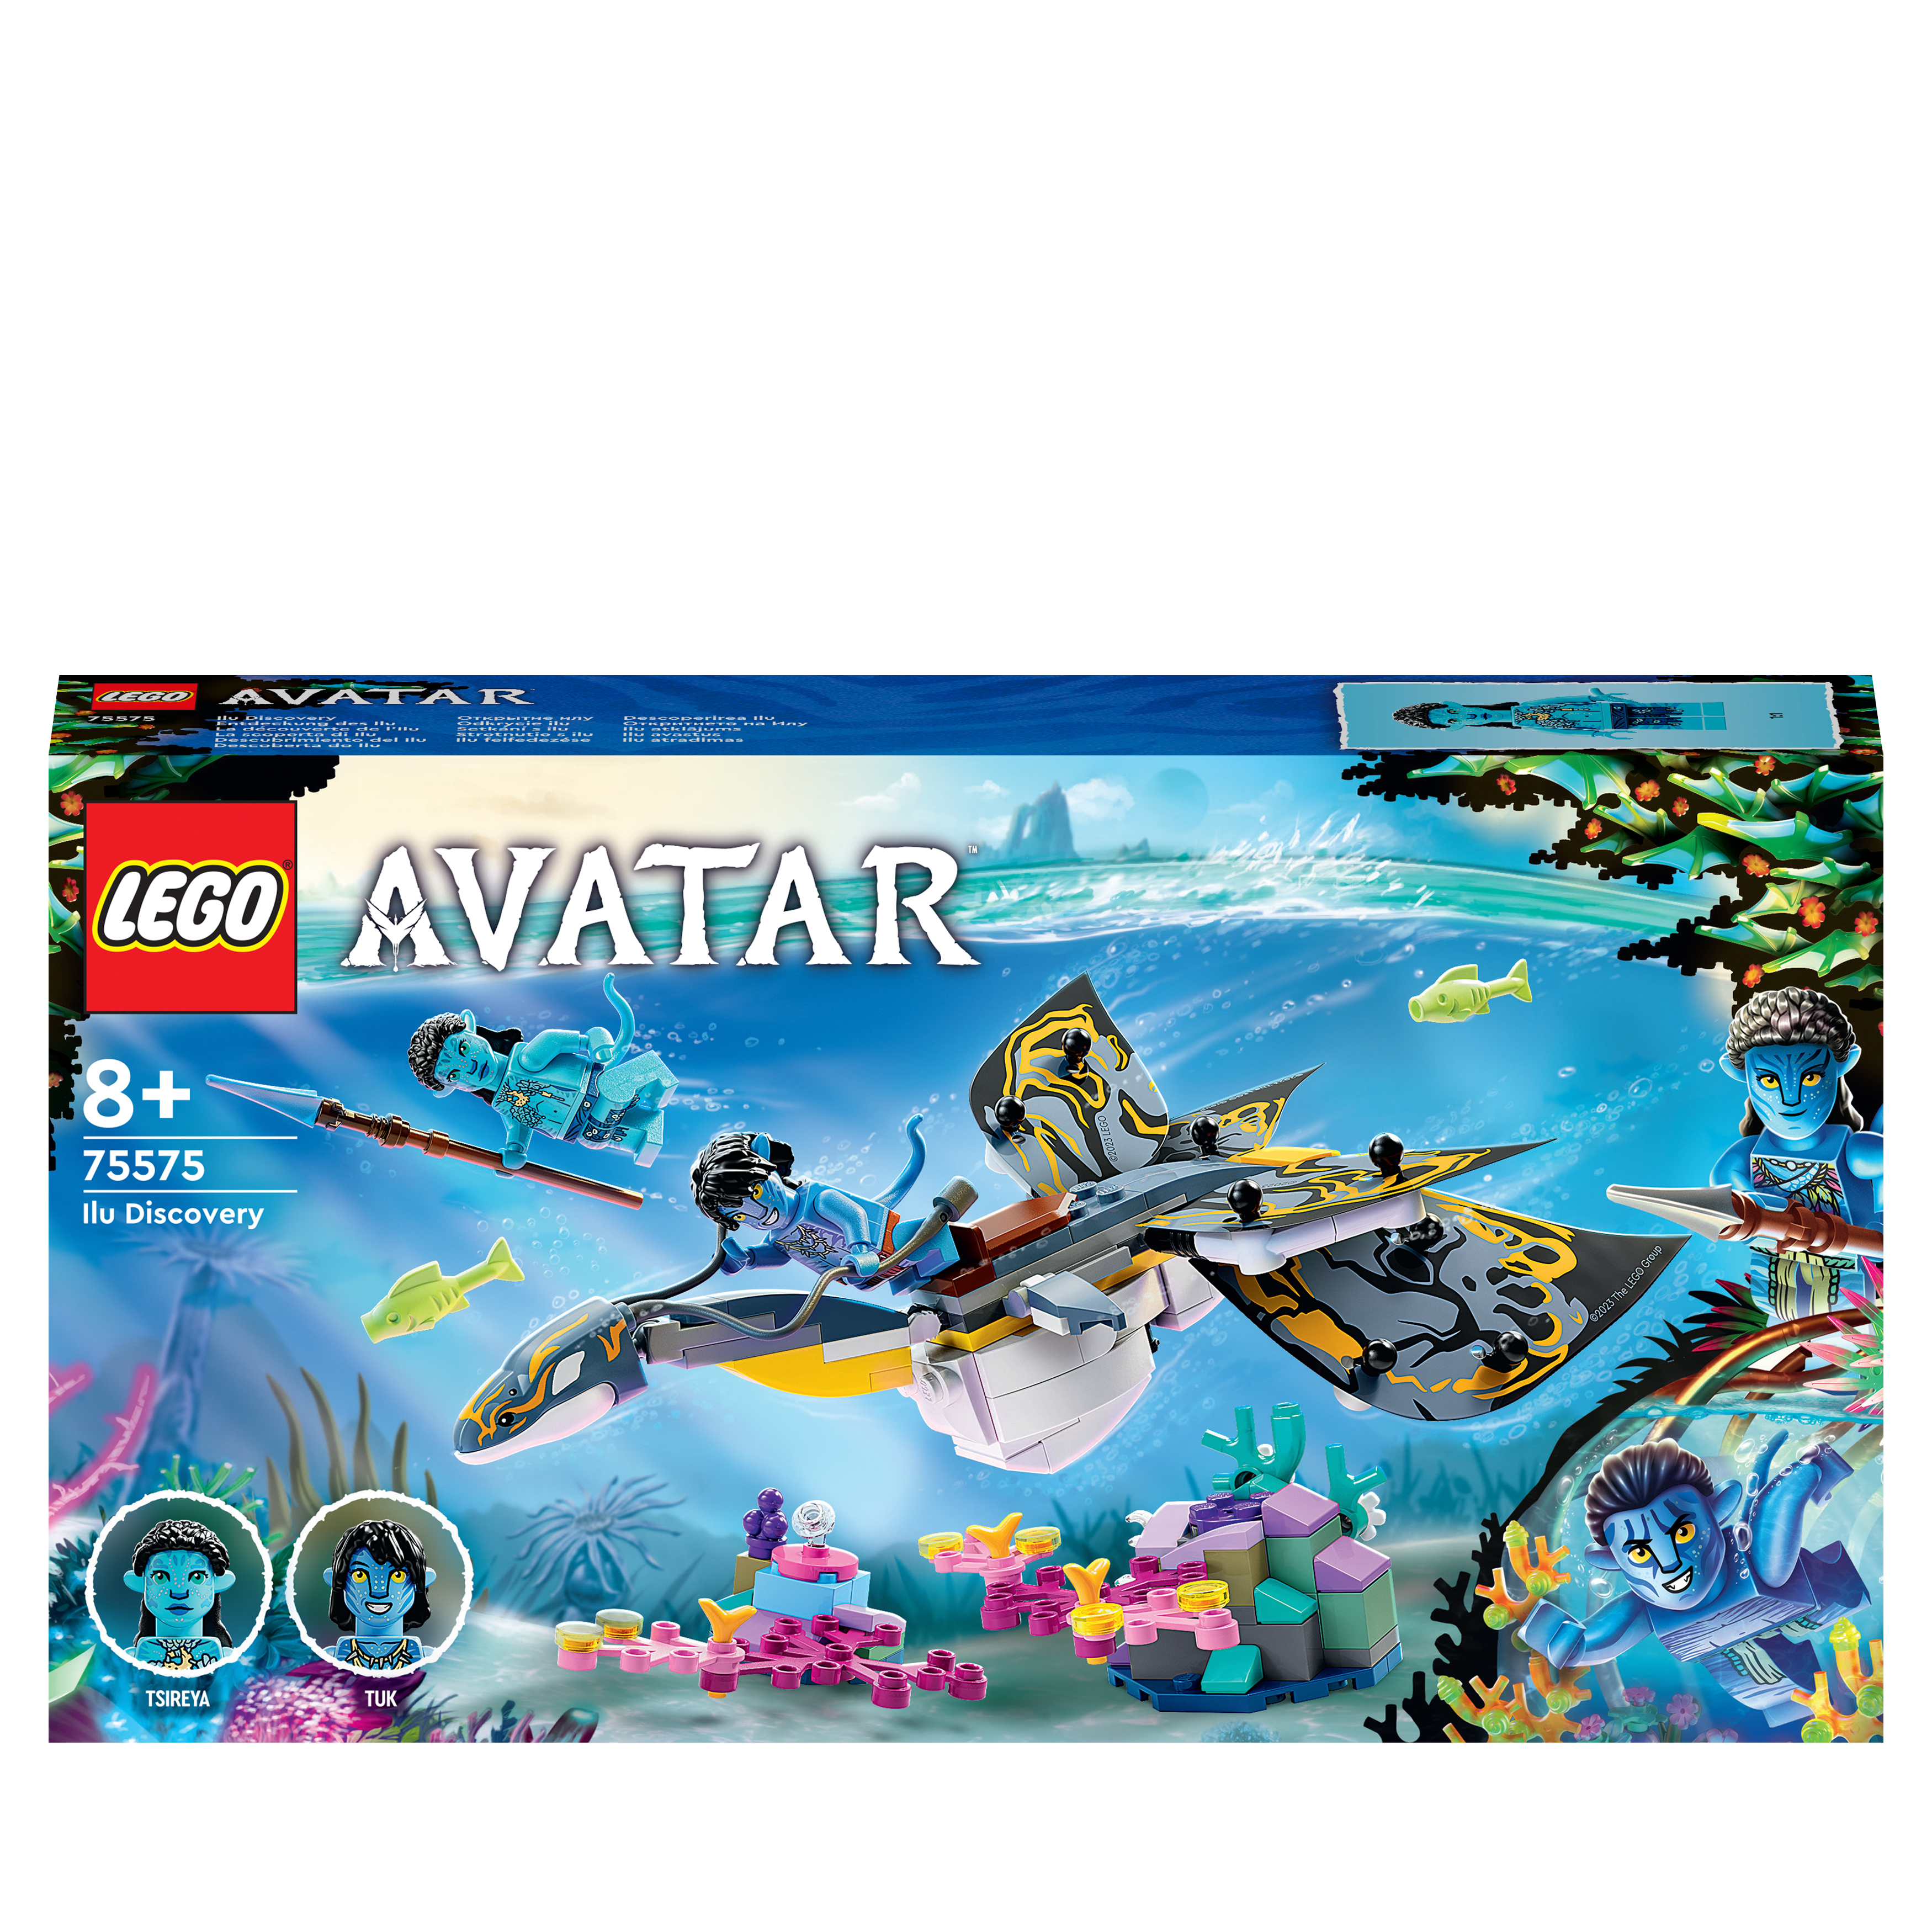 LEGO Avatar 75575 Entdeckung des Mehrfarbig Bausatz, Ilu